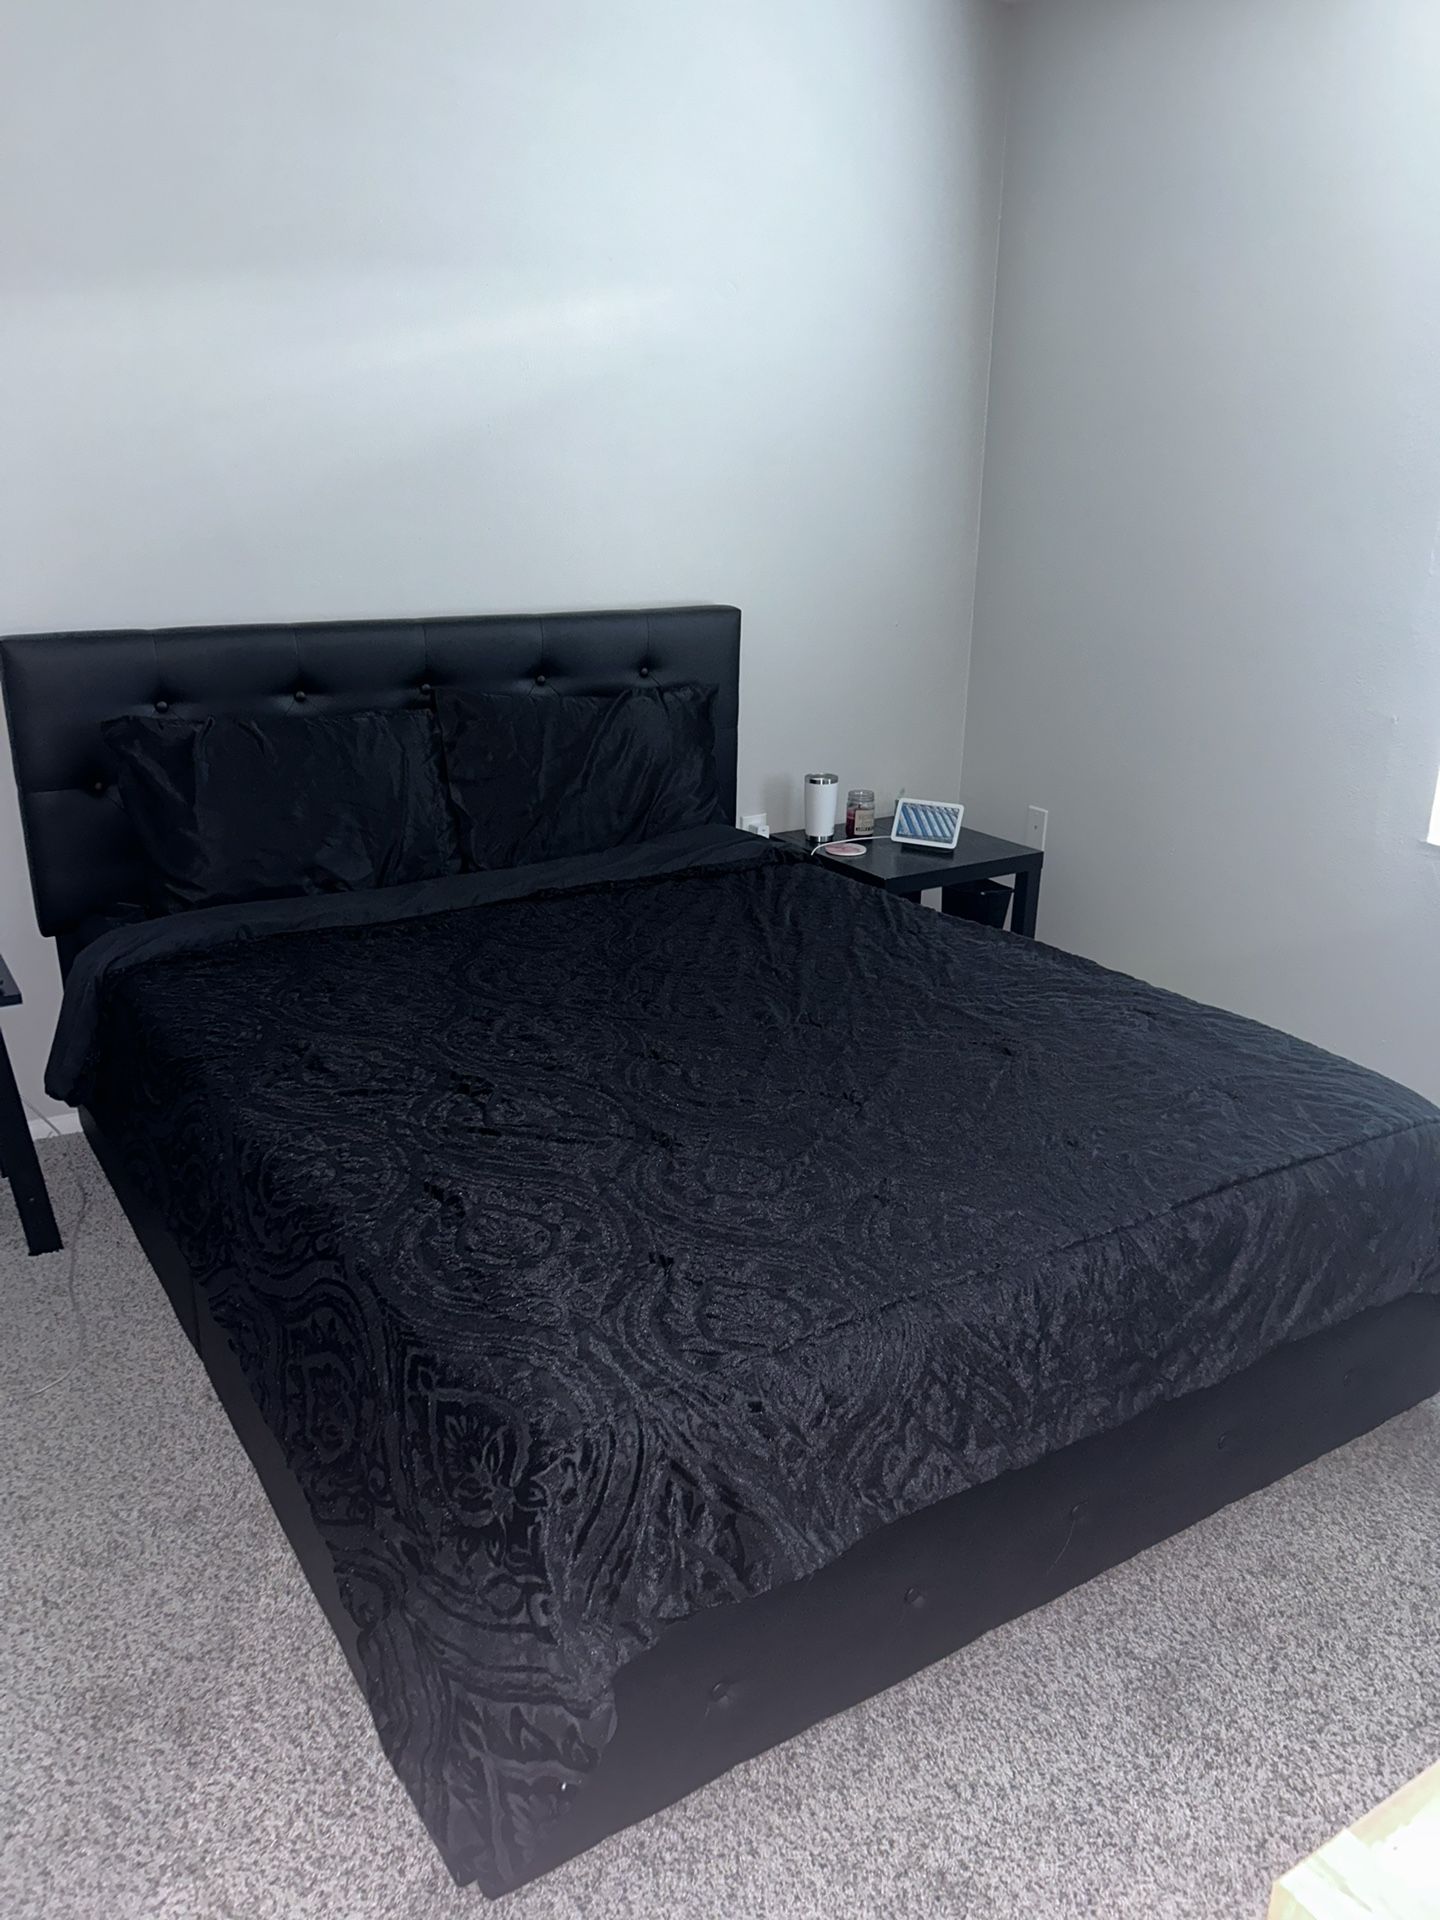 Queen Bed Set, mattress, bed frame, head board, comforter set